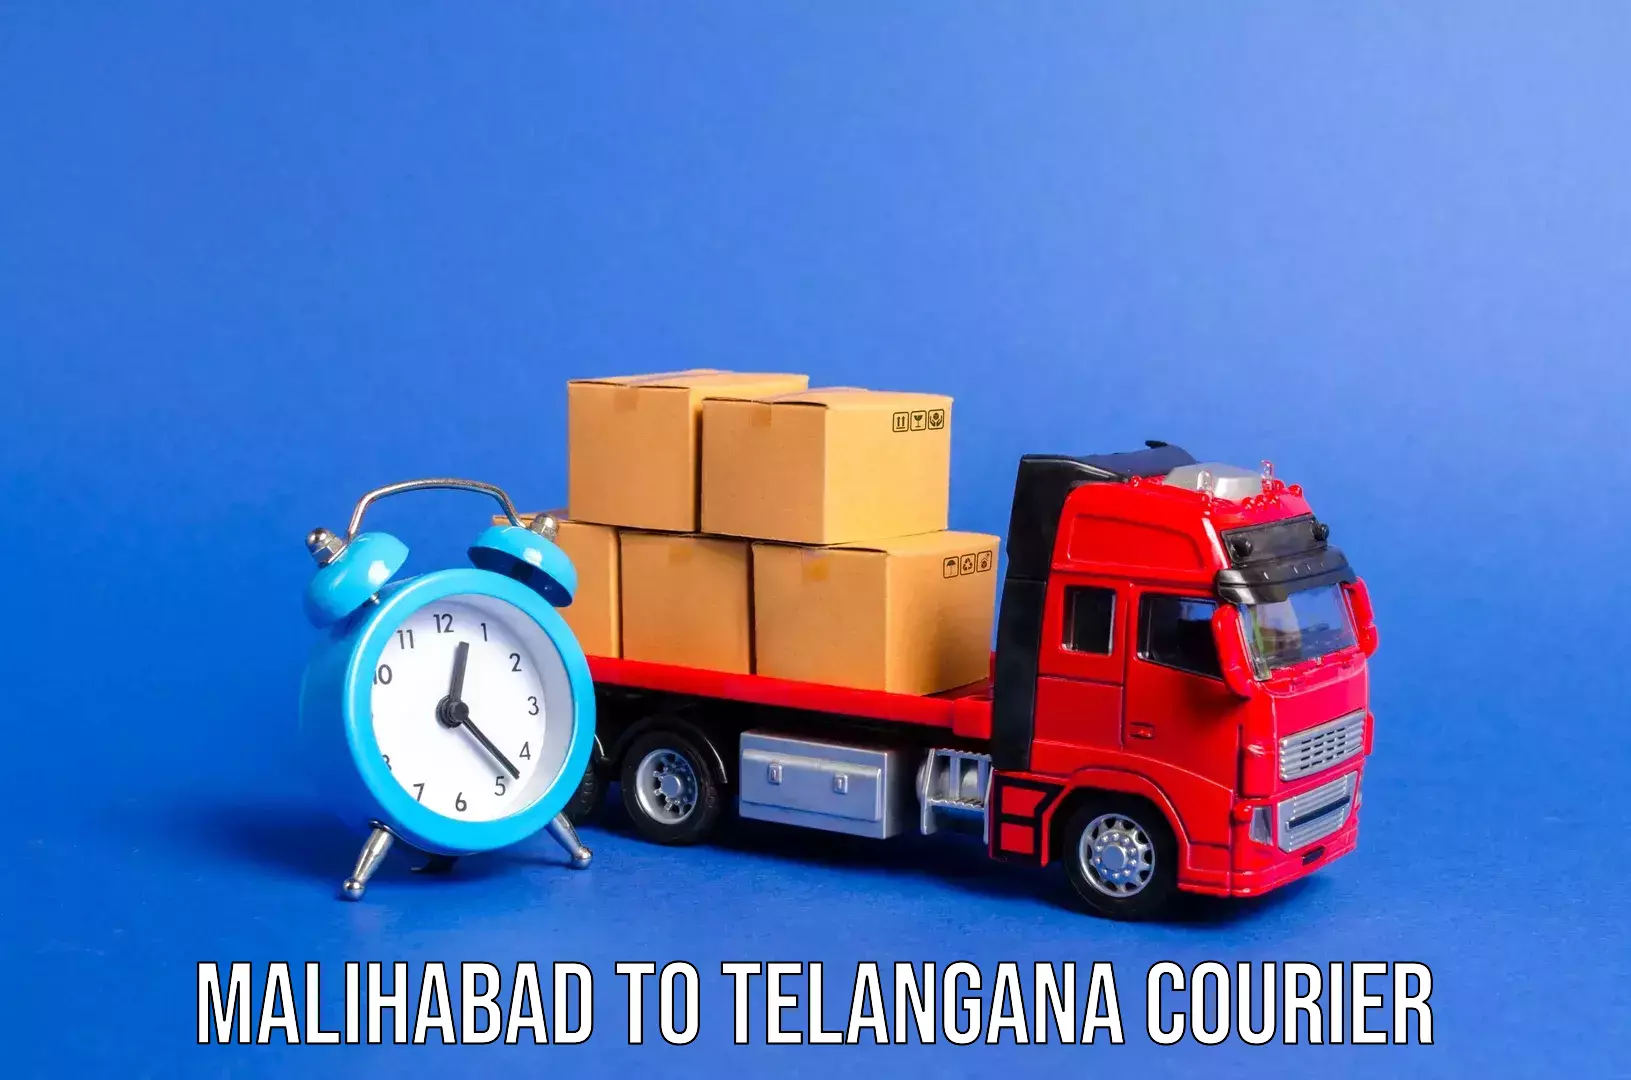 Luggage storage and delivery in Malihabad to Padmajiwadi